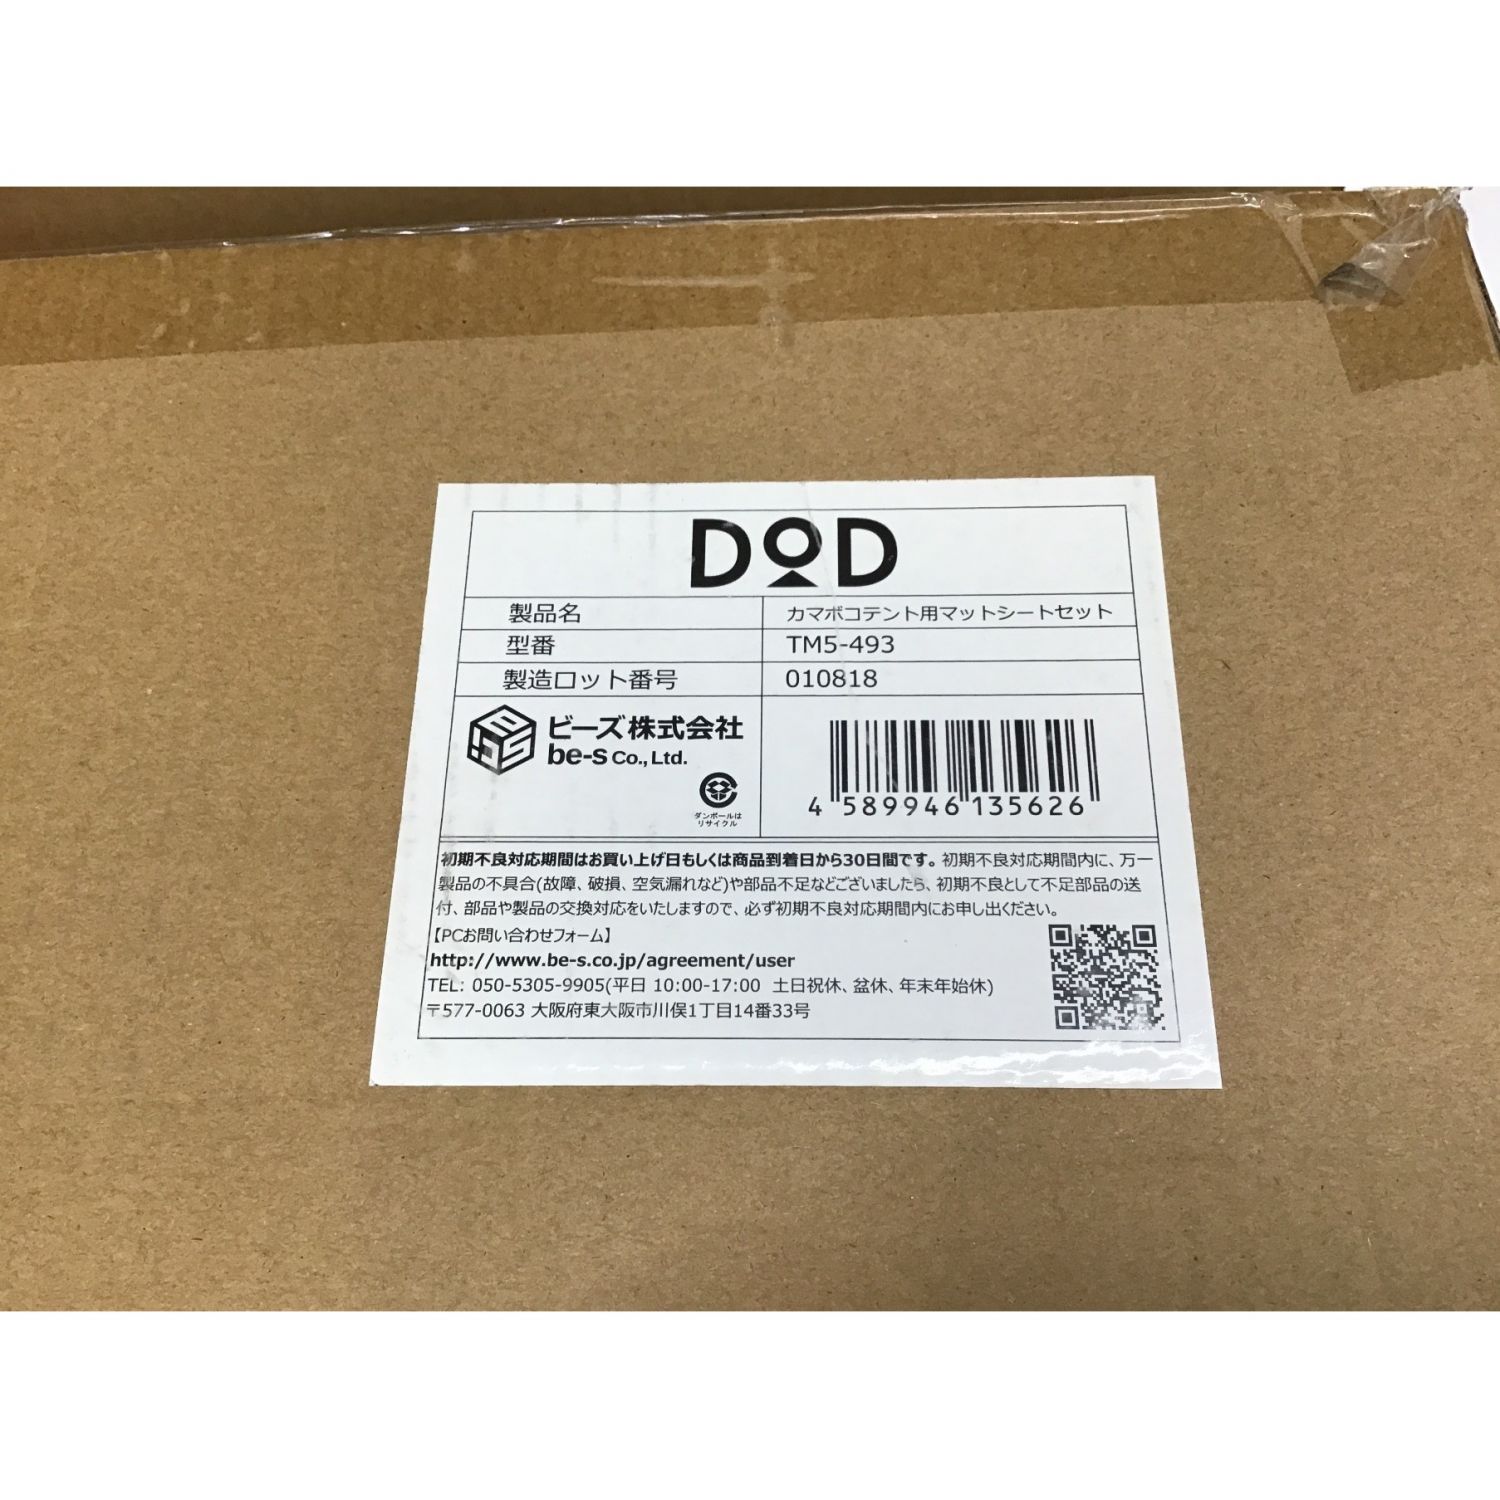 DOD (ディーオーディー(ドッペルギャンガー)) カマボコテント用マットシートセット 未使用品 TM5-493 カマボコテント用マットシートセット